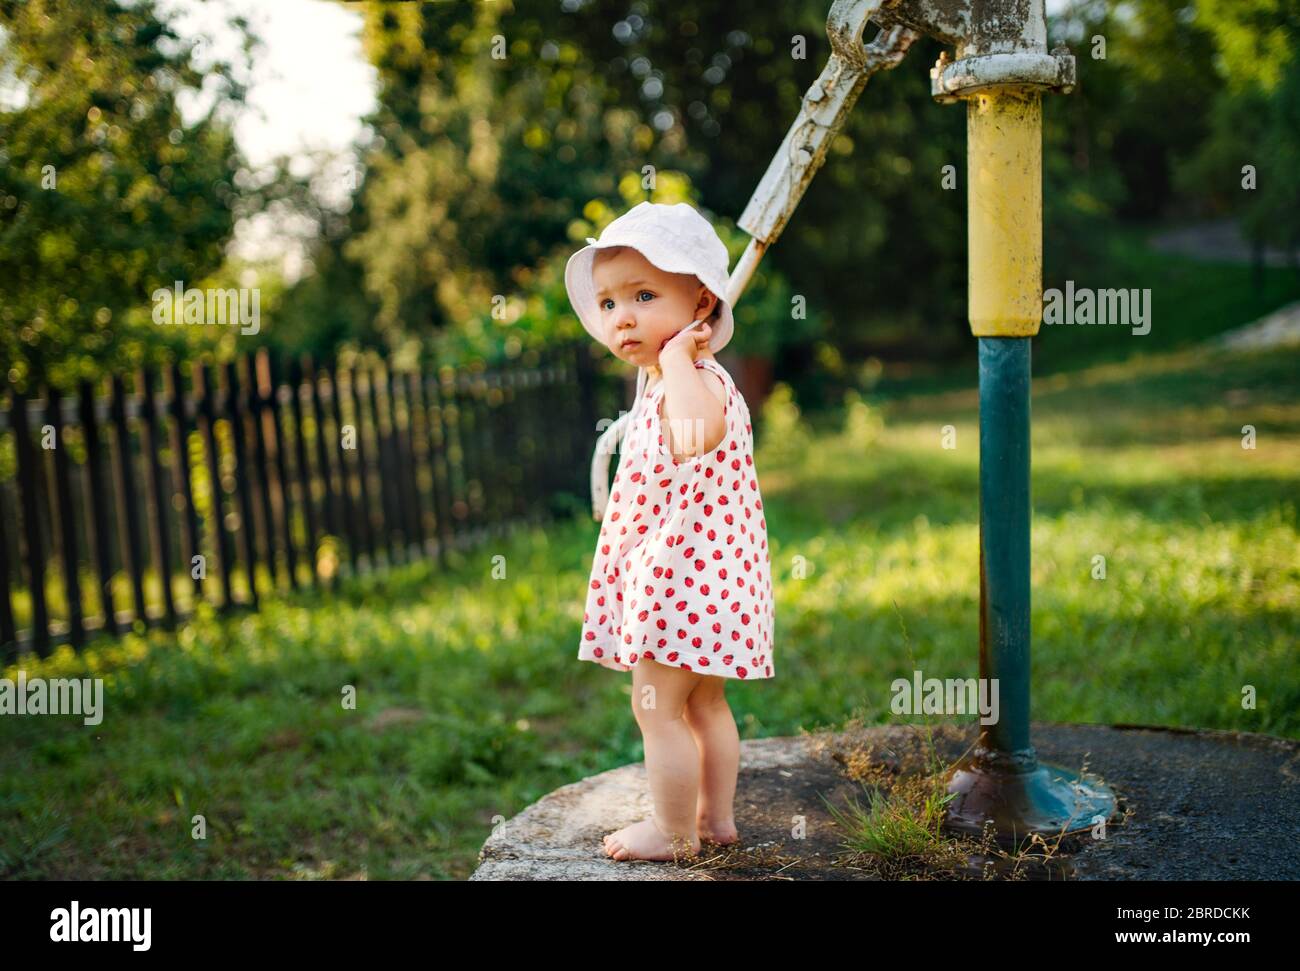 A toddler girl standing outdoors in garden in summer. Stock Photo